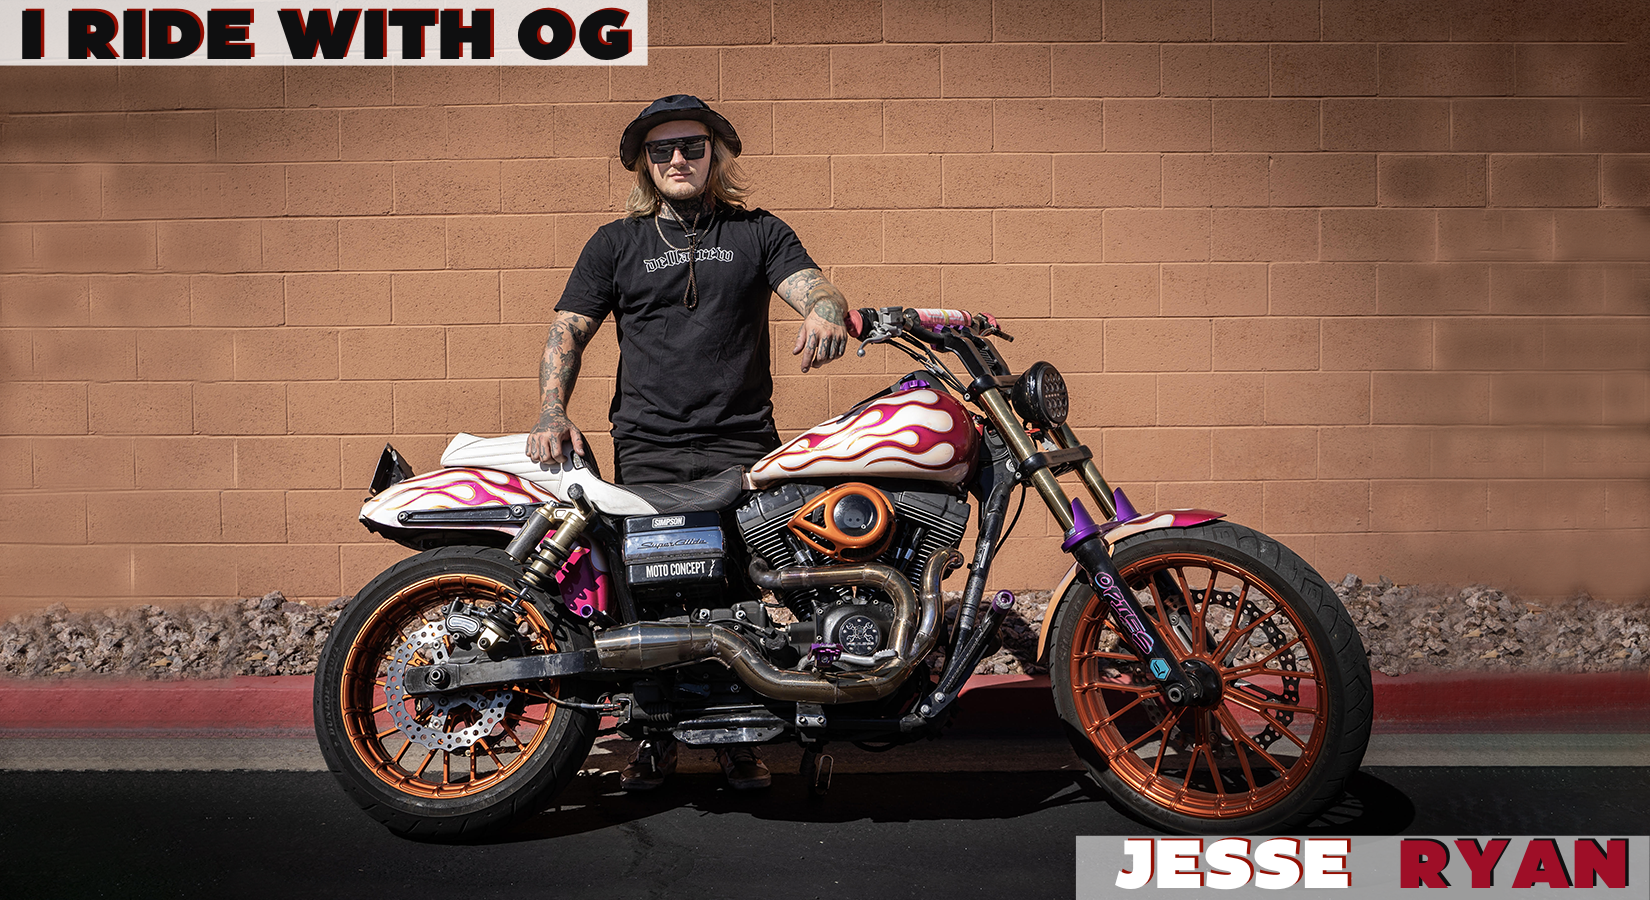 I Ride With OG: Jesse Ryan